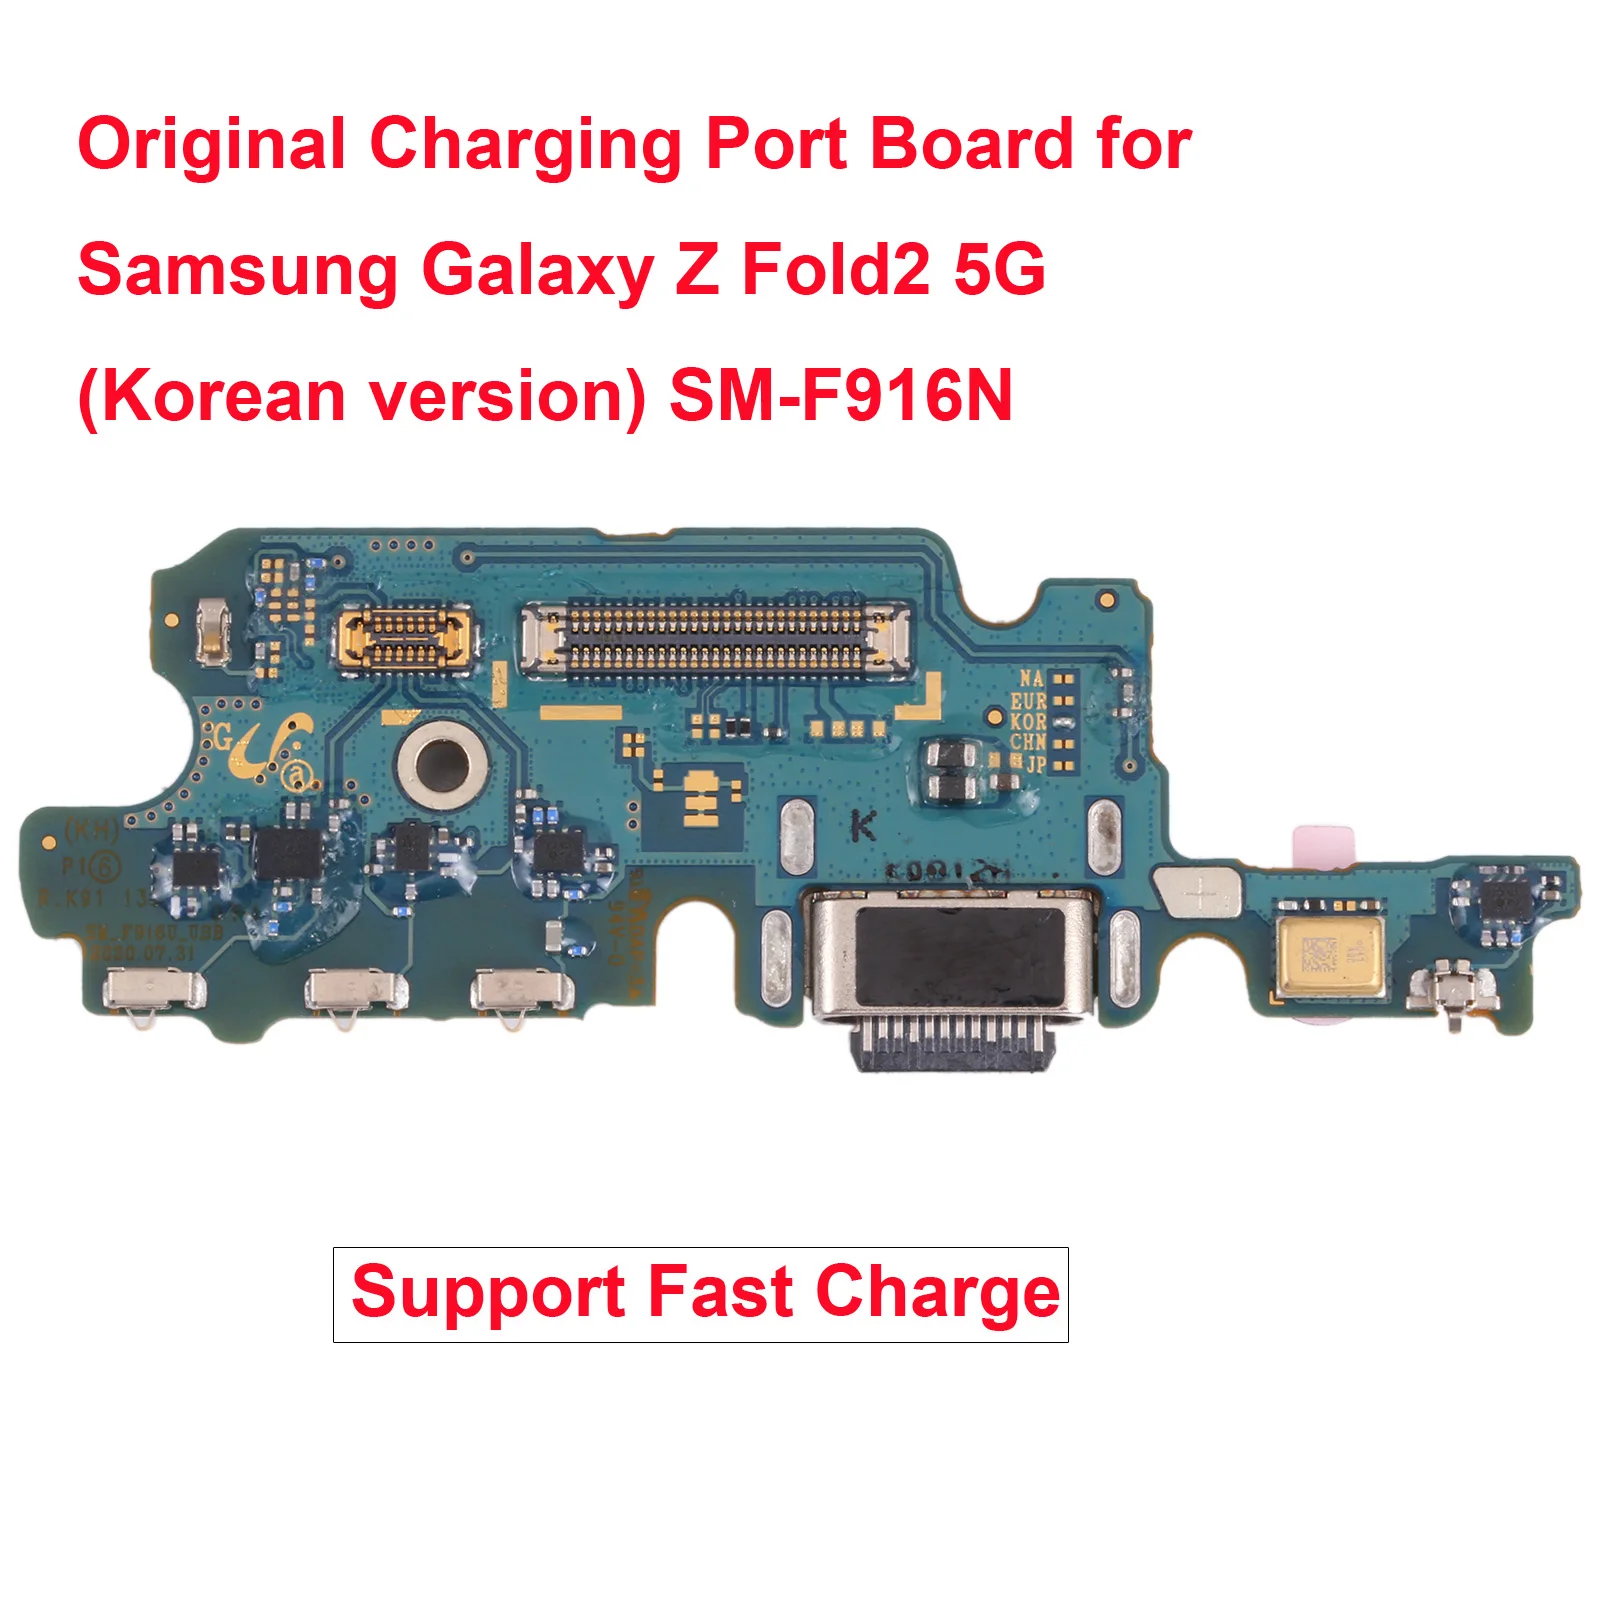 Original USB Charging Port Board for Samsung Galaxy Z Fold2 5G (US Version) SM-F916U/SM-F916N Korean version